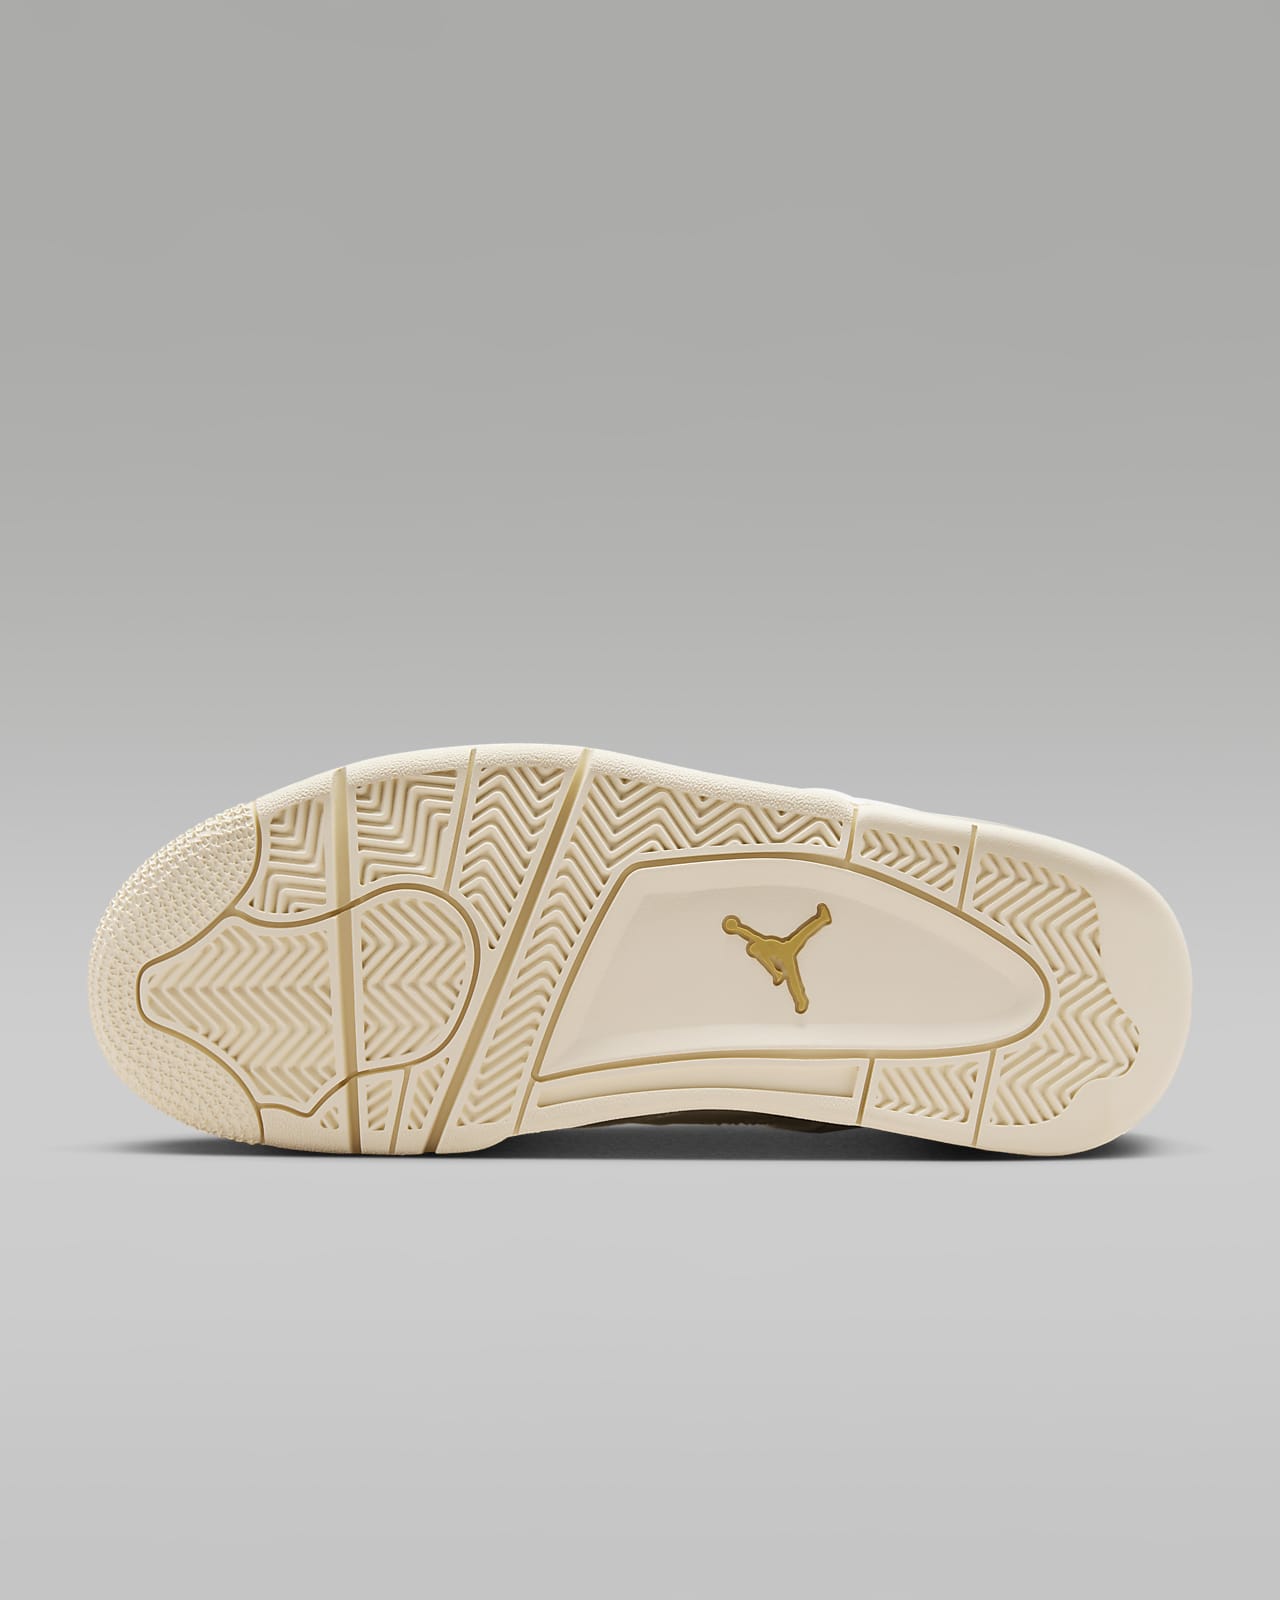 Air Jordan 4 Retro Women's Shoes.